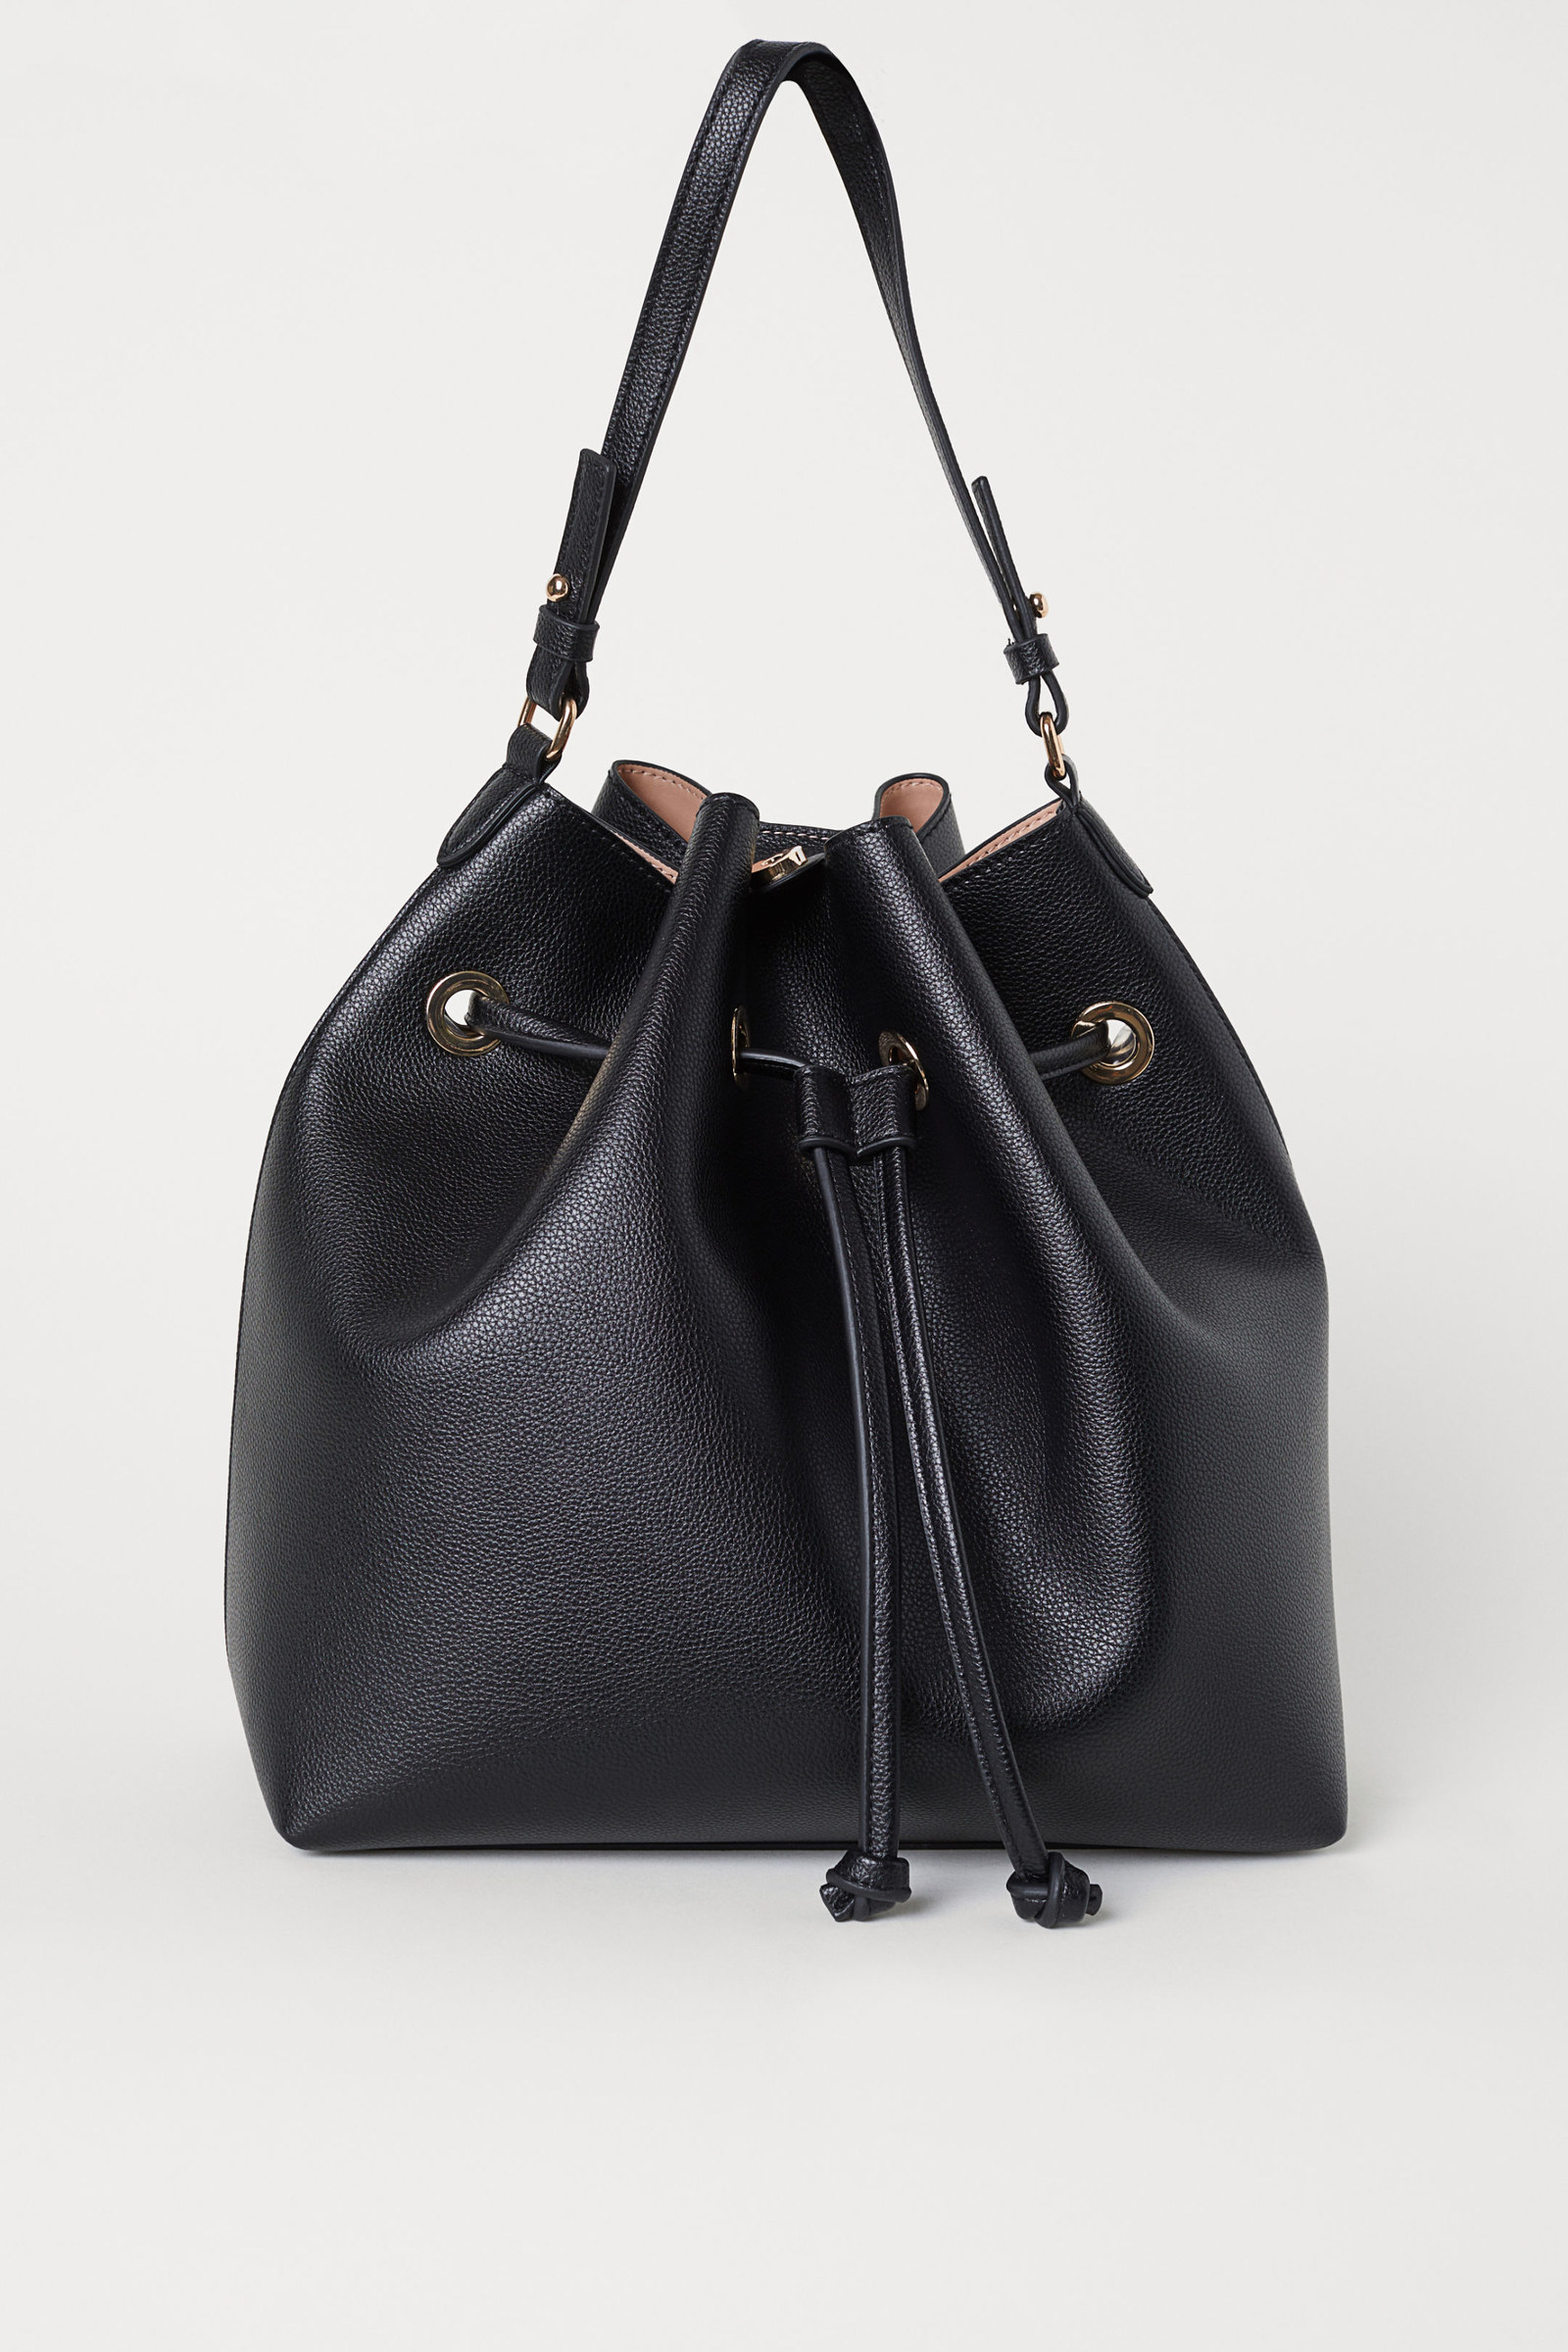 Womens Handbags - Buy Handbags For Women Online